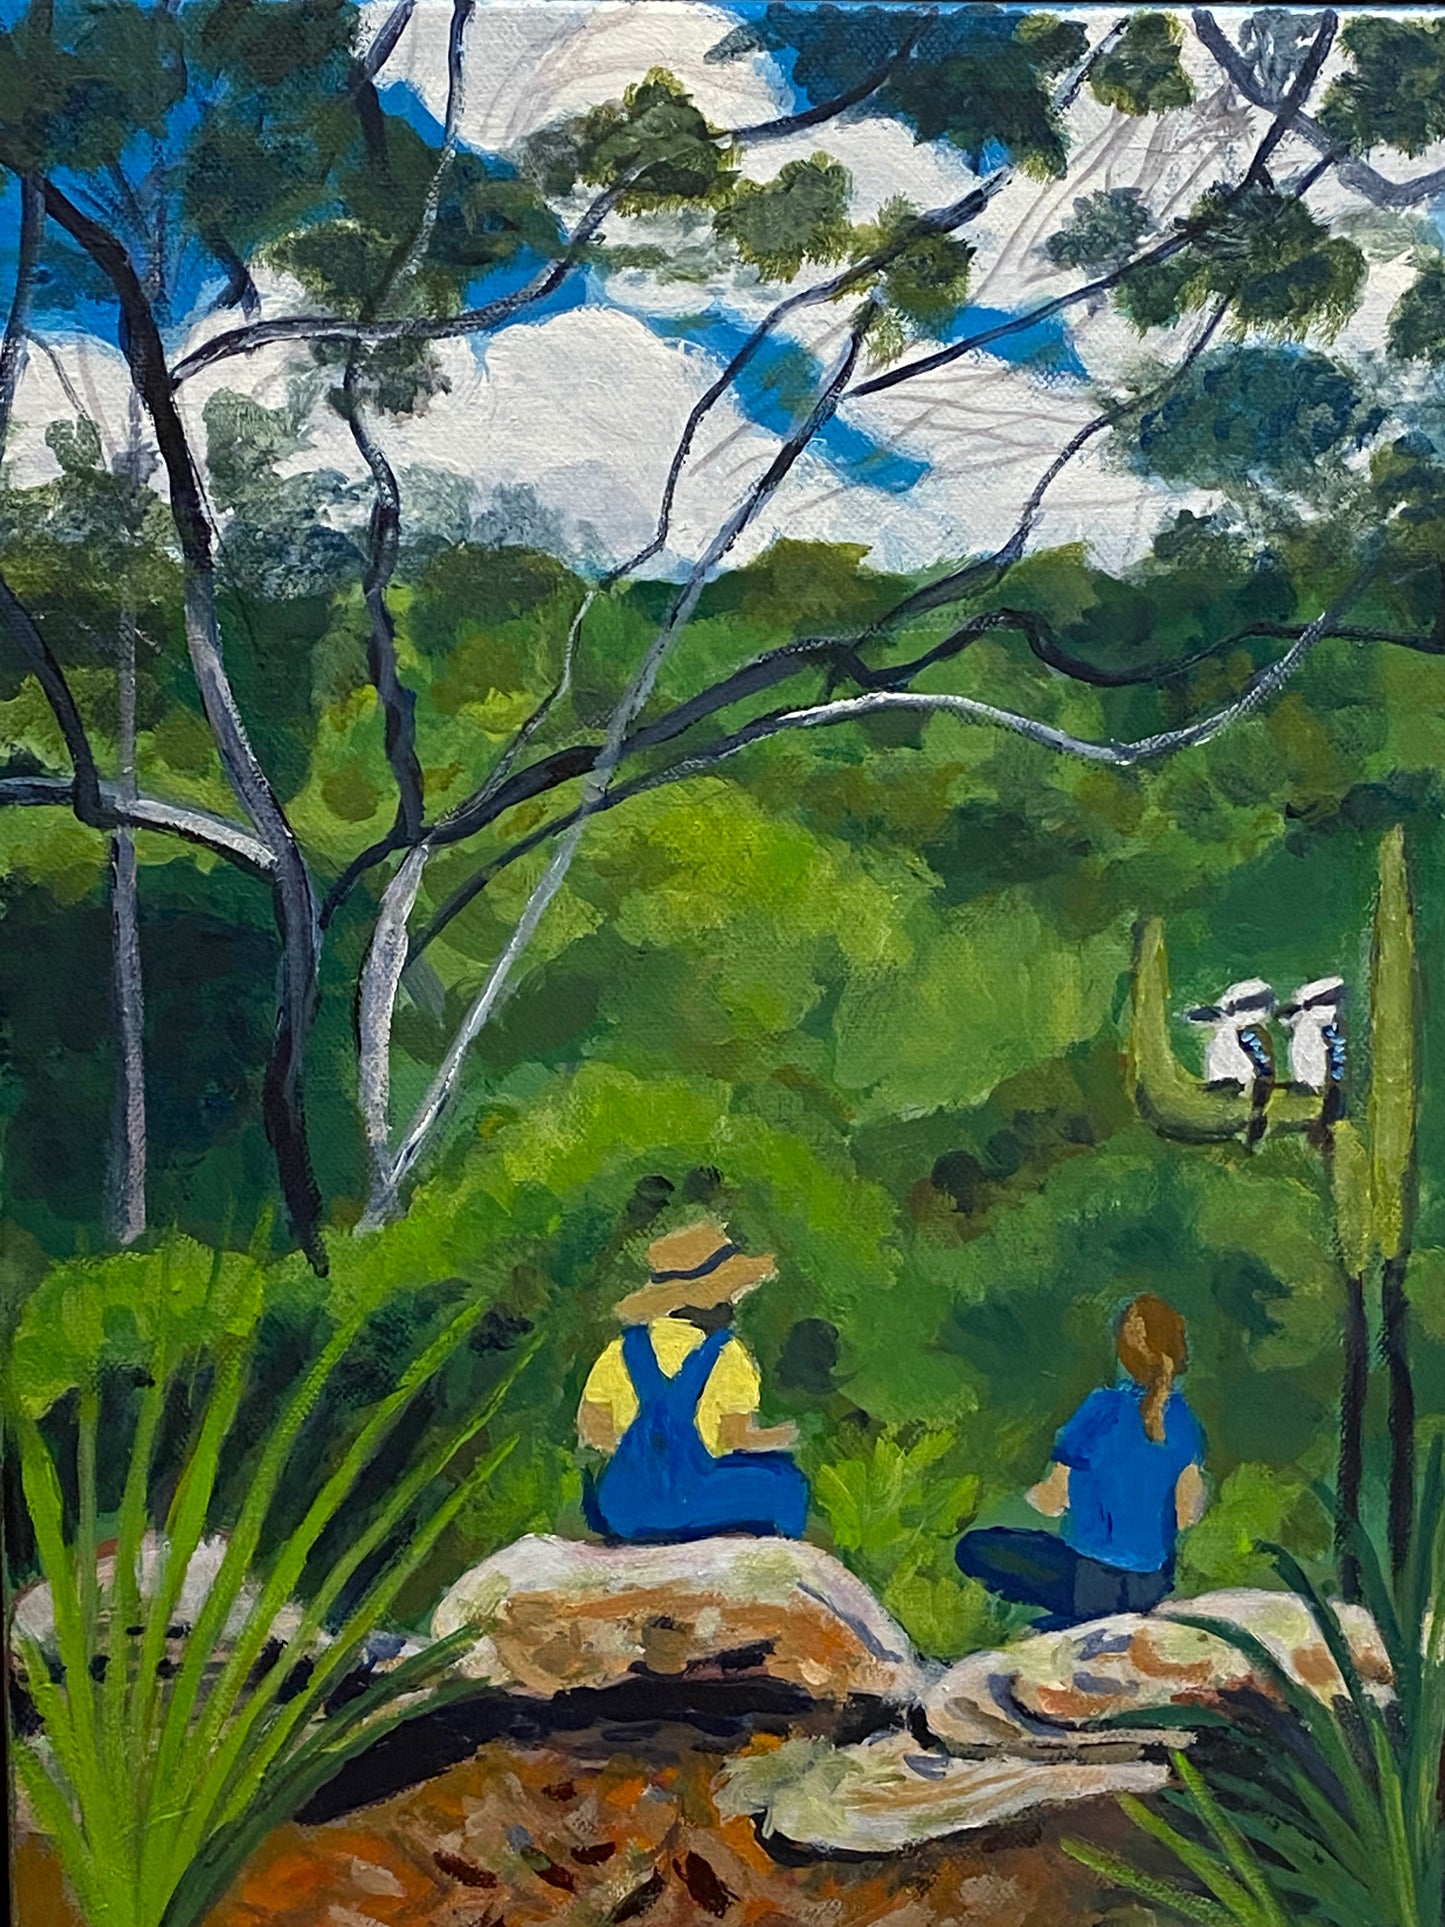 Meditation on the Australian bush